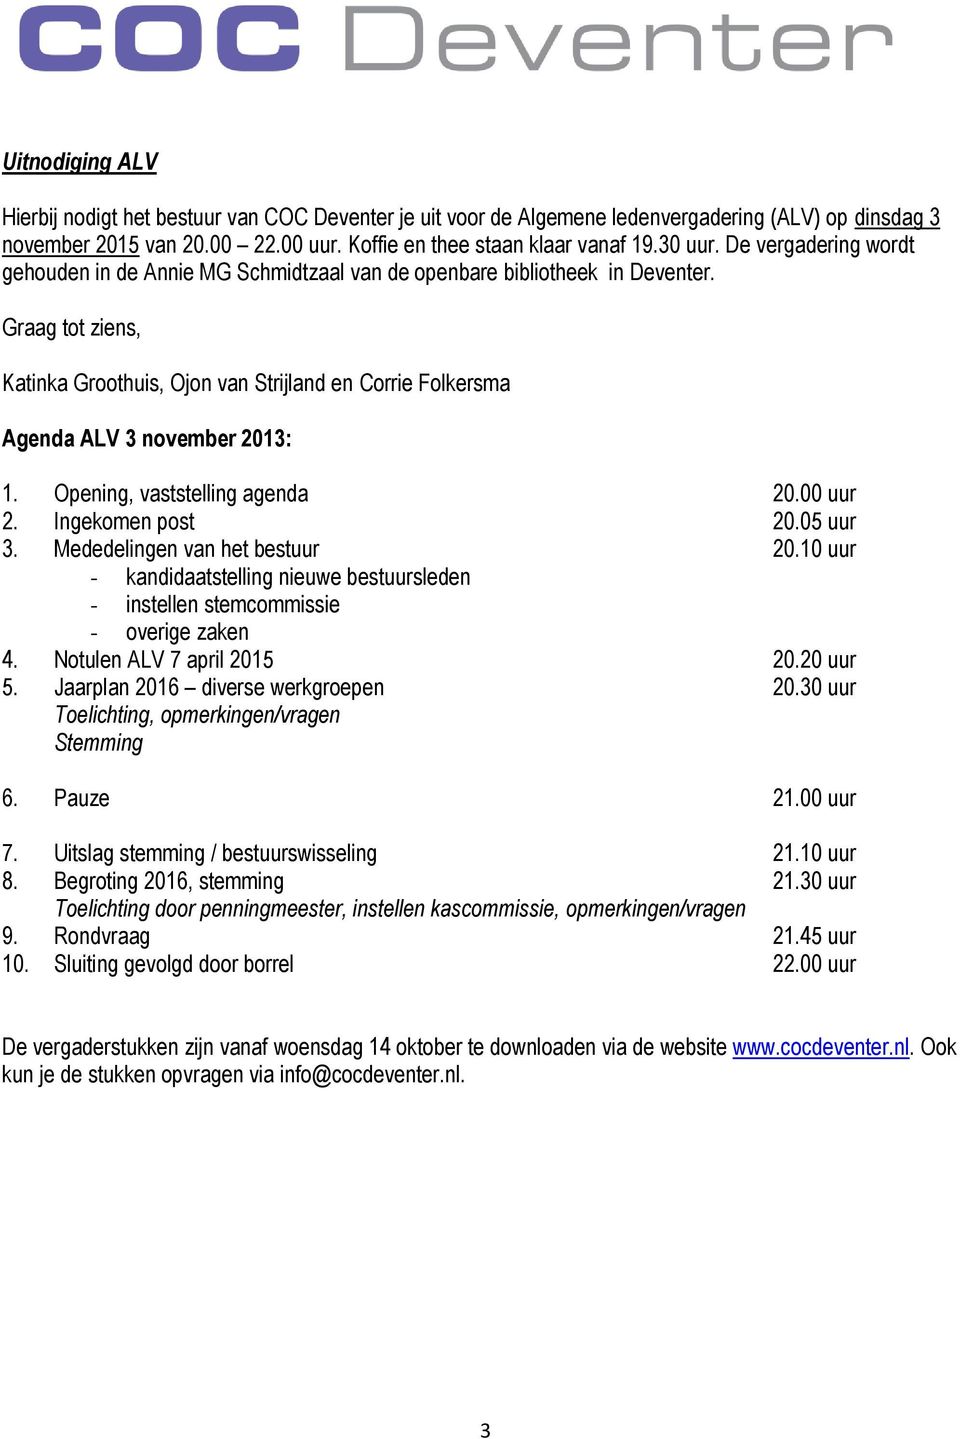 Graag tot ziens, Katinka Groothuis, Ojon van Strijland en Corrie Folkersma Agenda ALV 3 november 2013: 1. Opening, vaststelling agenda 20.00 uur 2. Ingekomen post 20.05 uur 3.